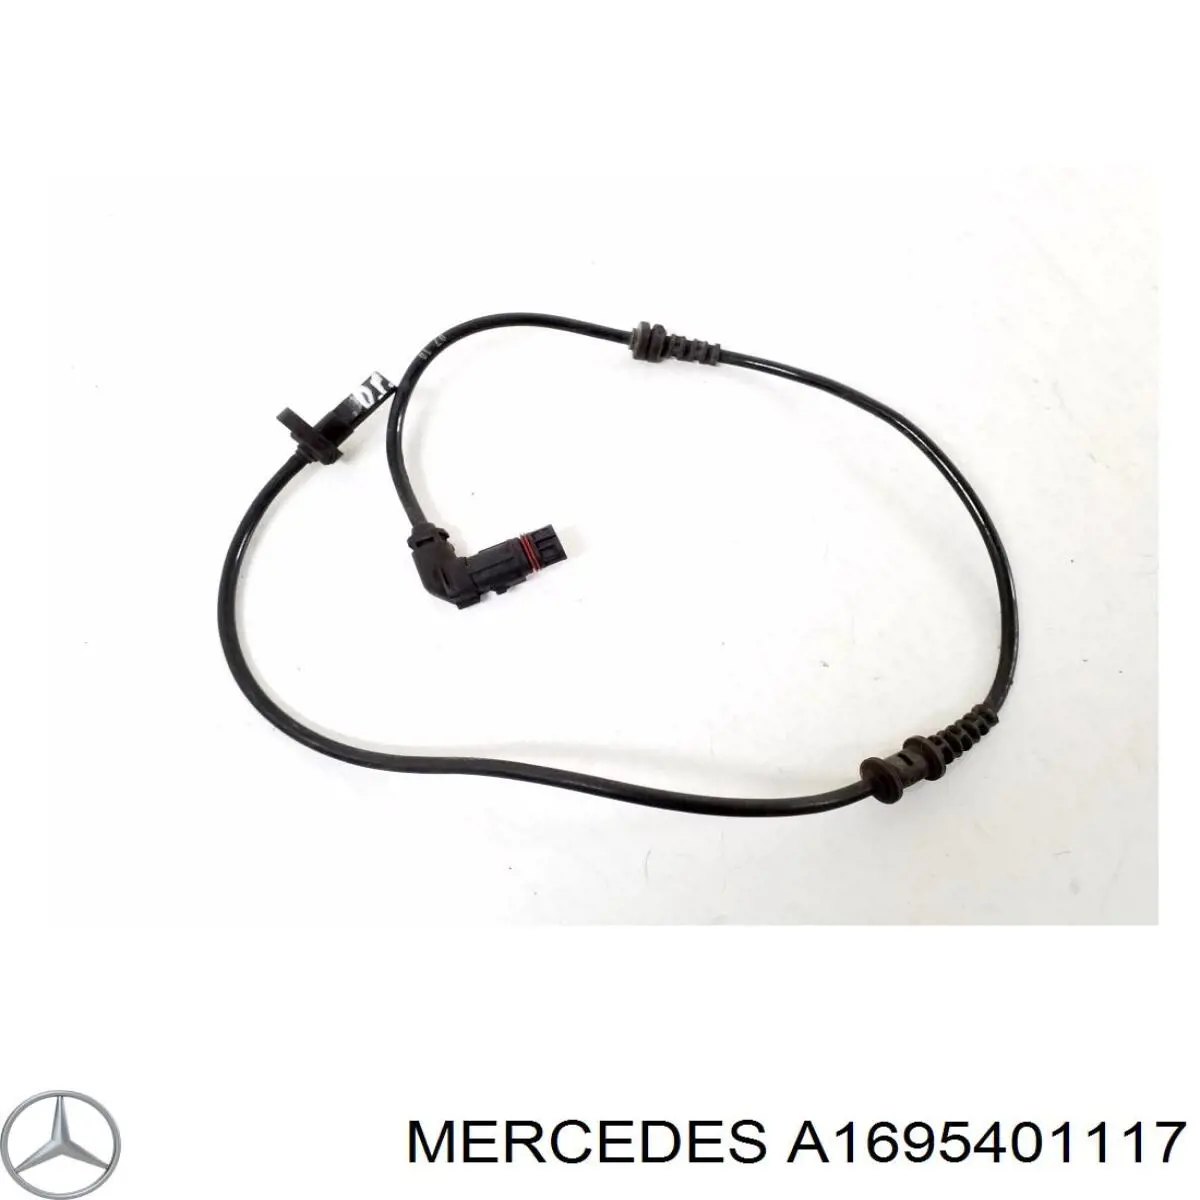 A1695401117 Mercedes датчик абс (abs передний)